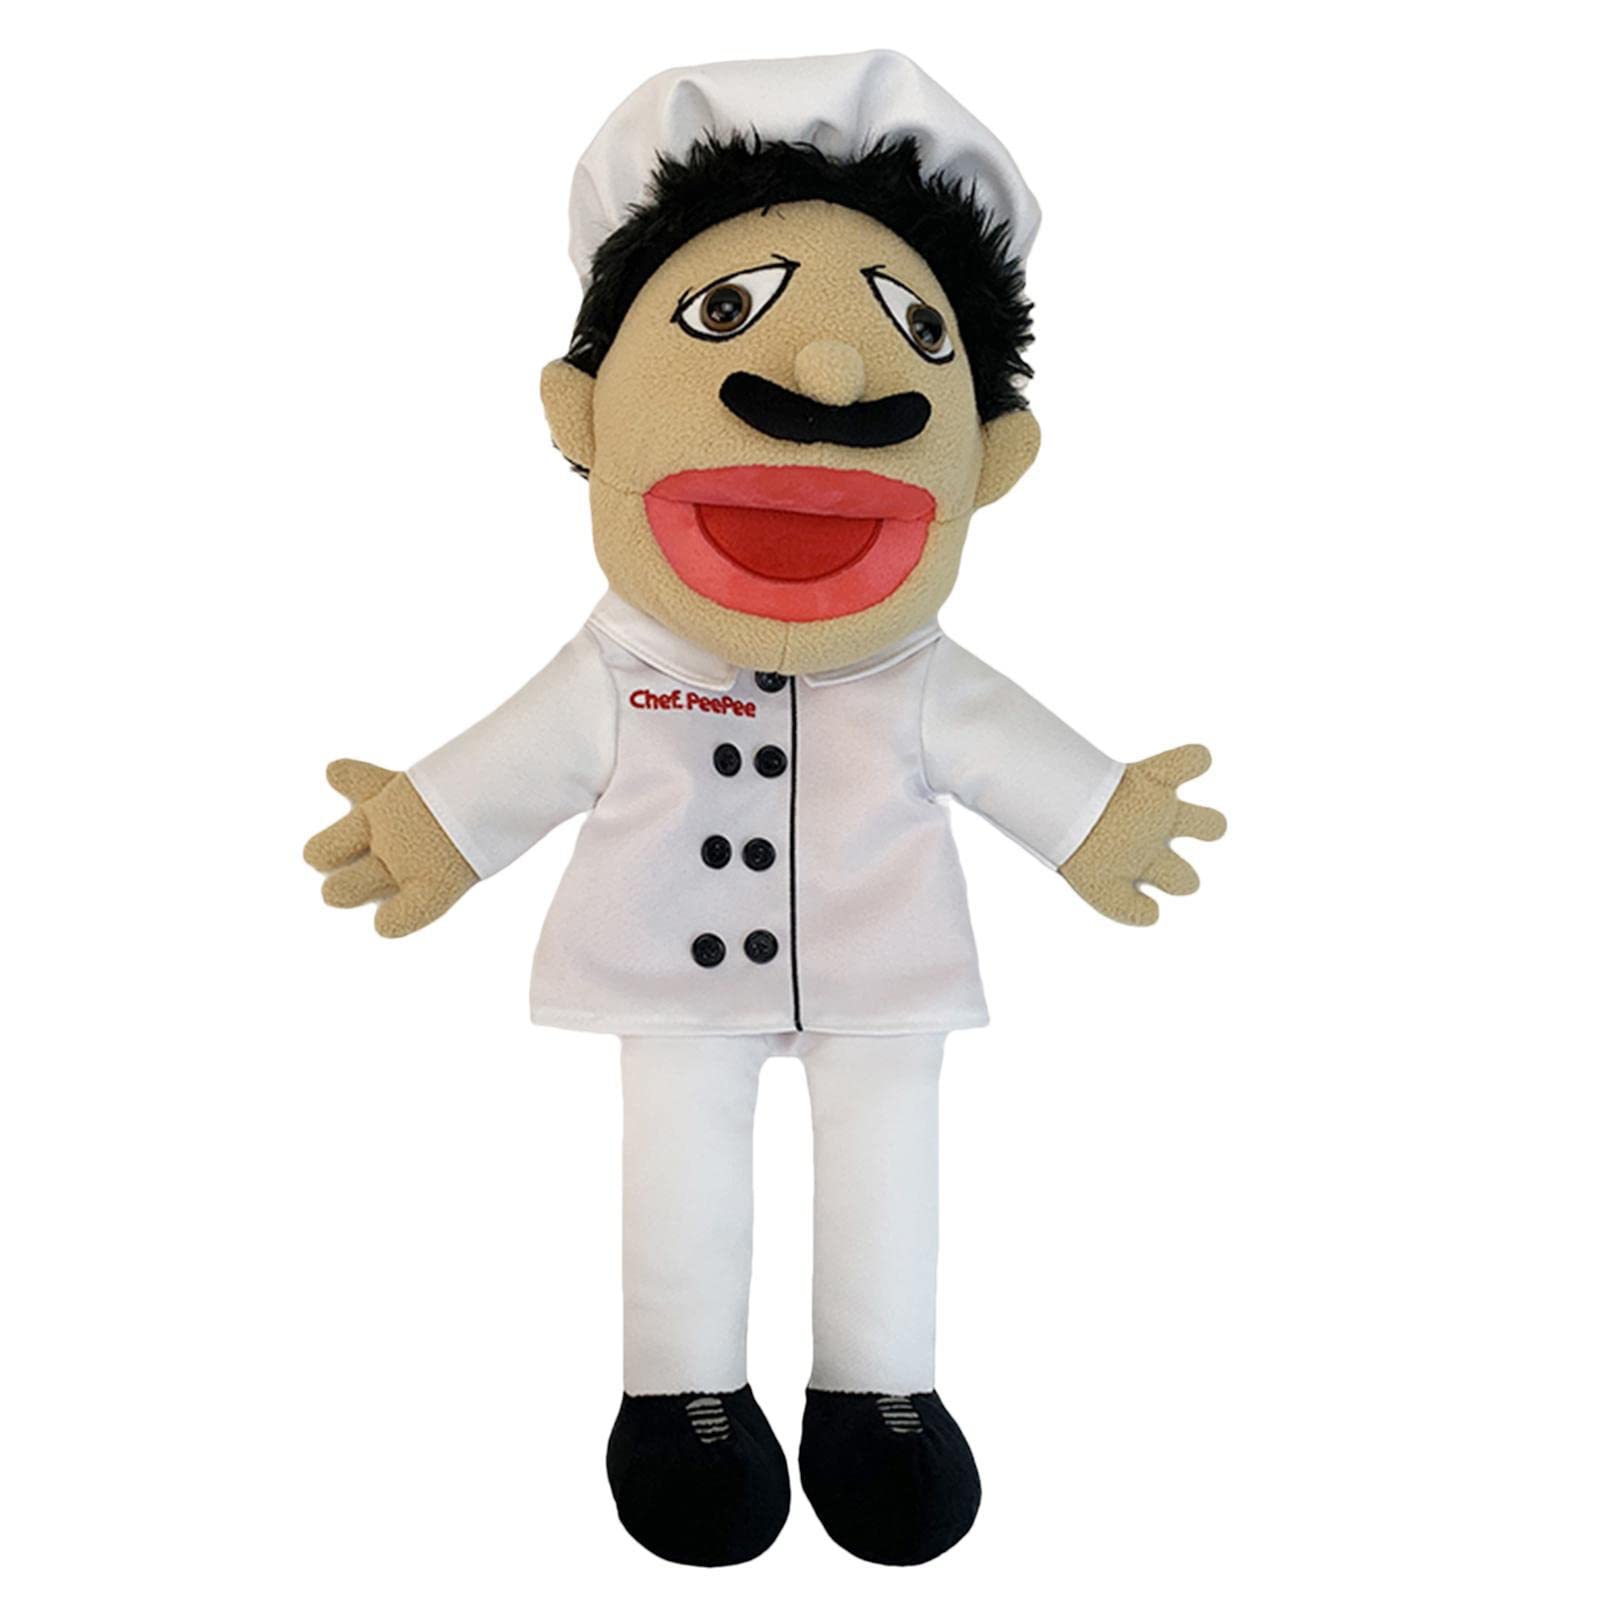 Chef Peepee Puppet Amazon troc tmb